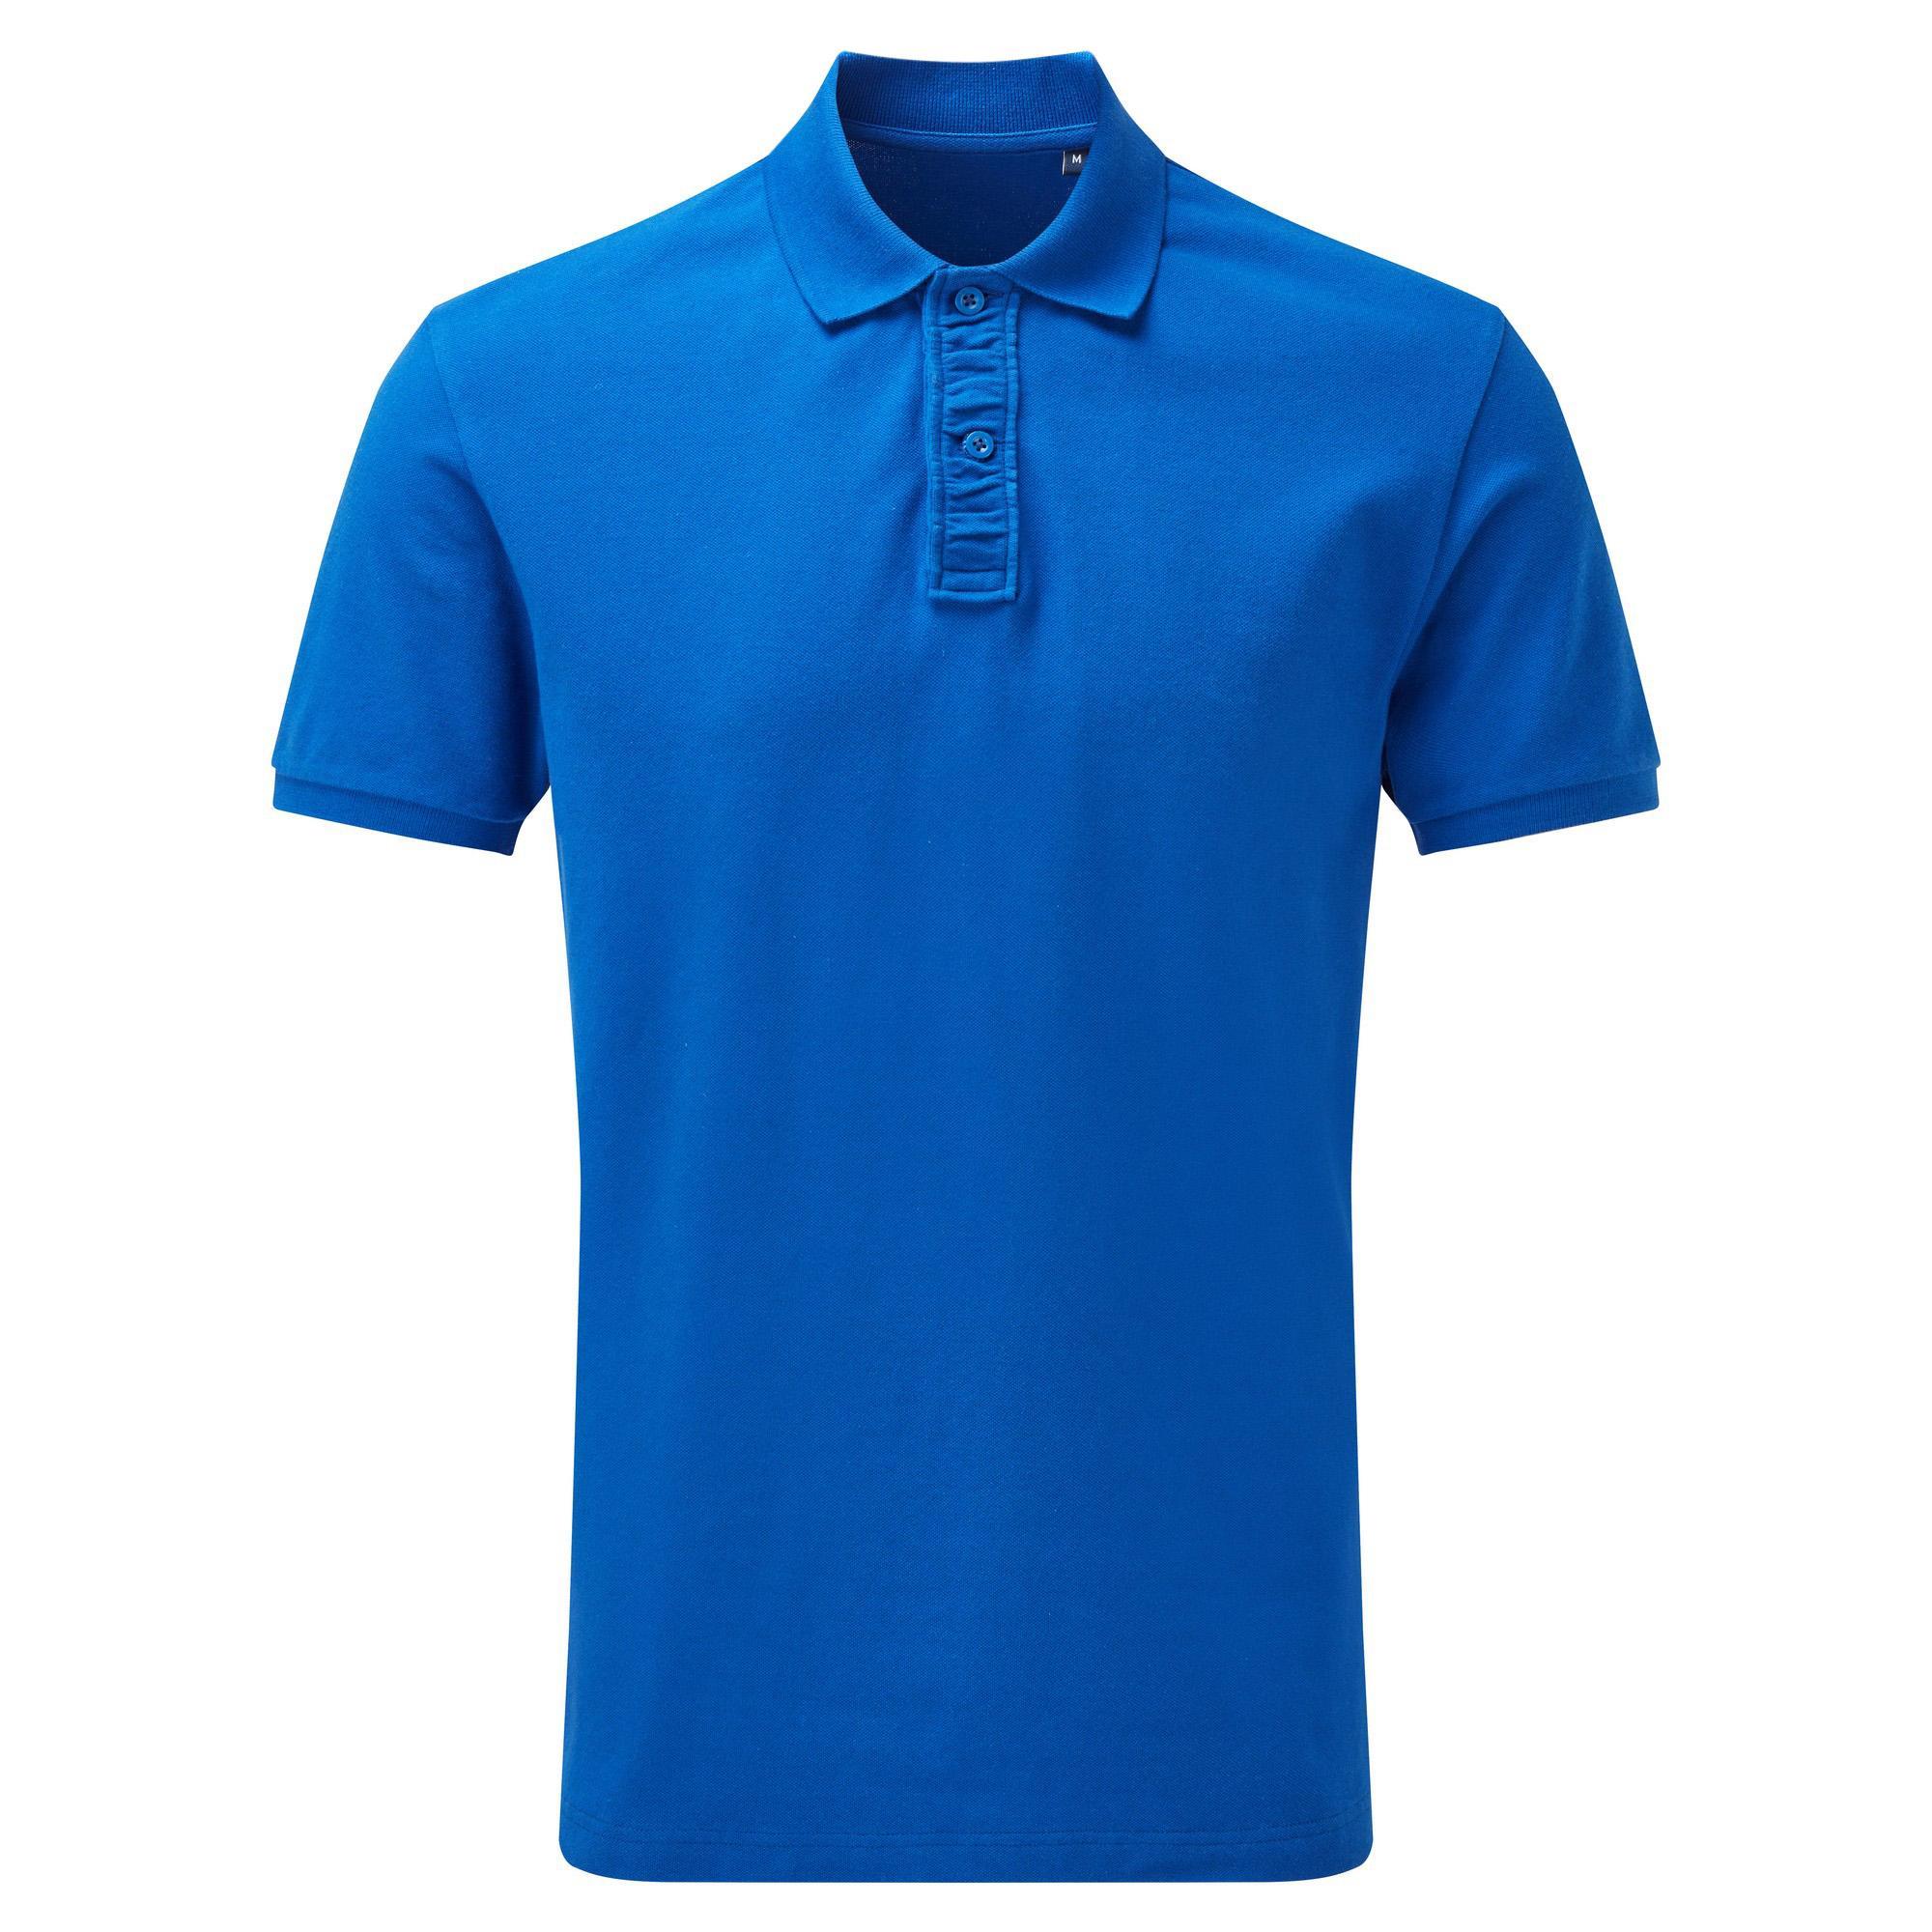 Asquith & Fox Mens Infinity Stretch Polo Shirt (Bright Royal Blue) (L)